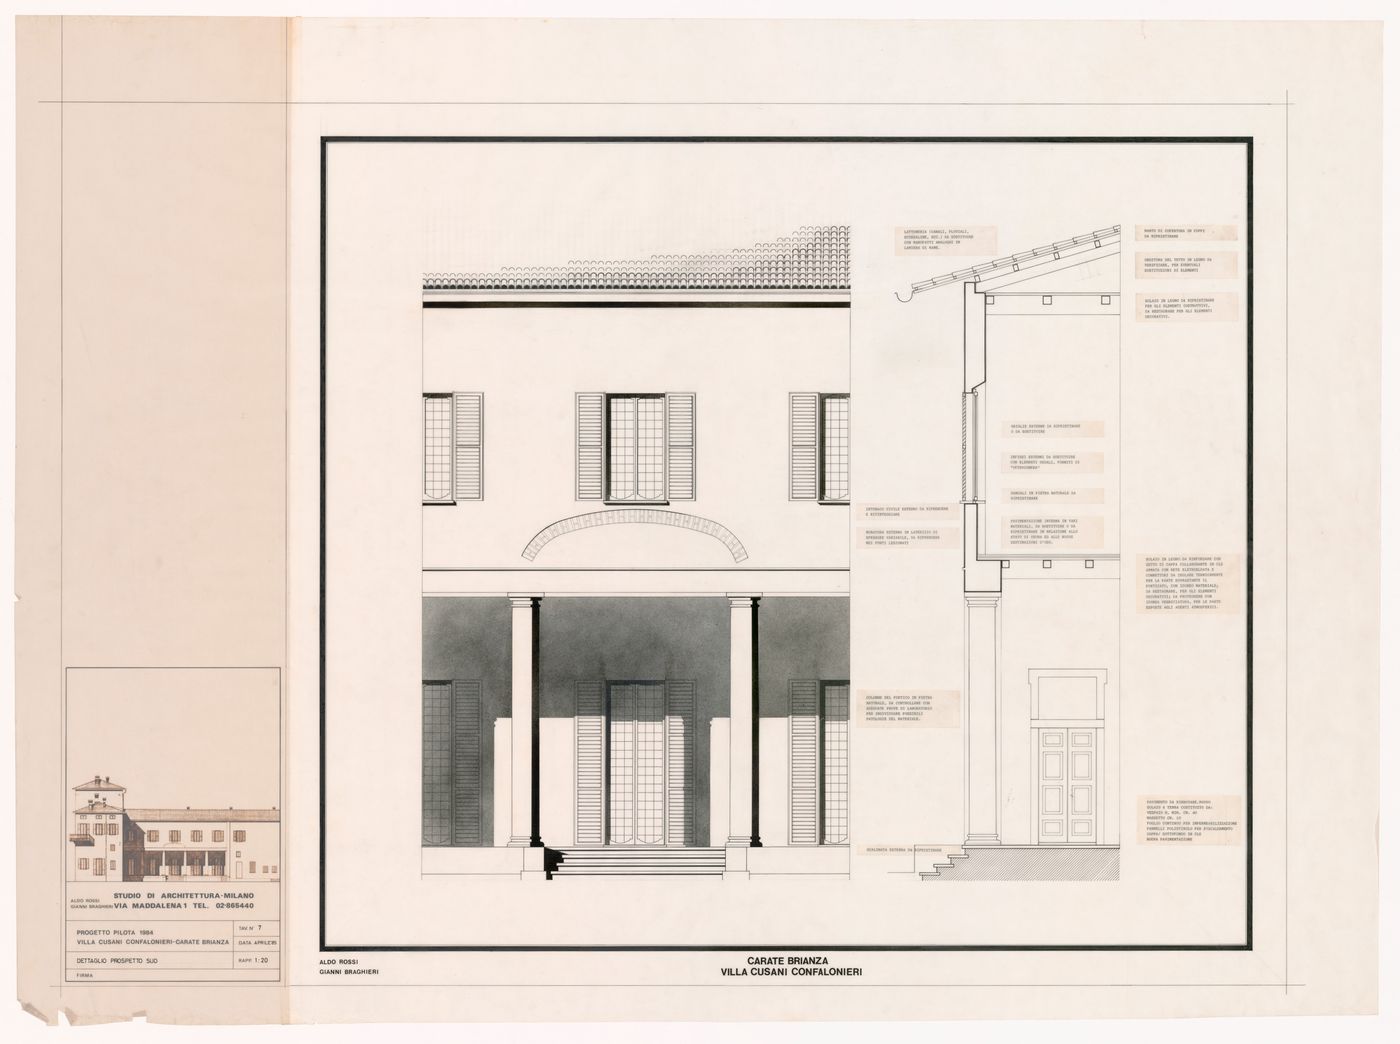 Elevation and details for Villa Cusani Confalonieri, Carate Brianza, Italy